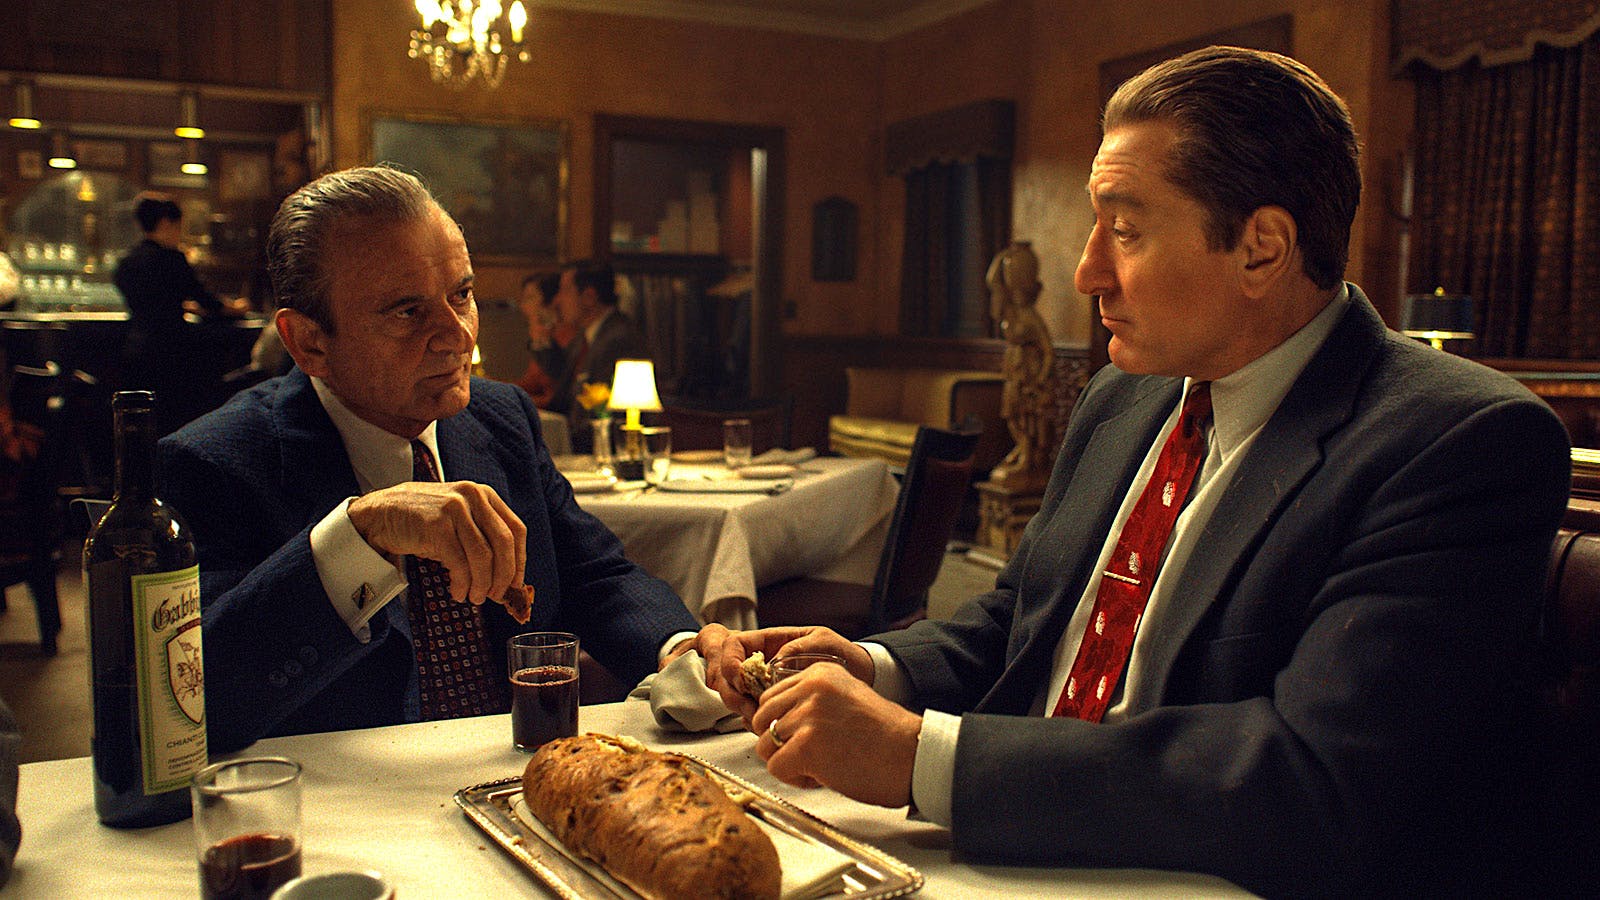 Joe Pesci and Robert De Niro convene over Gabbiano Chianti in a scene in The Irishman.